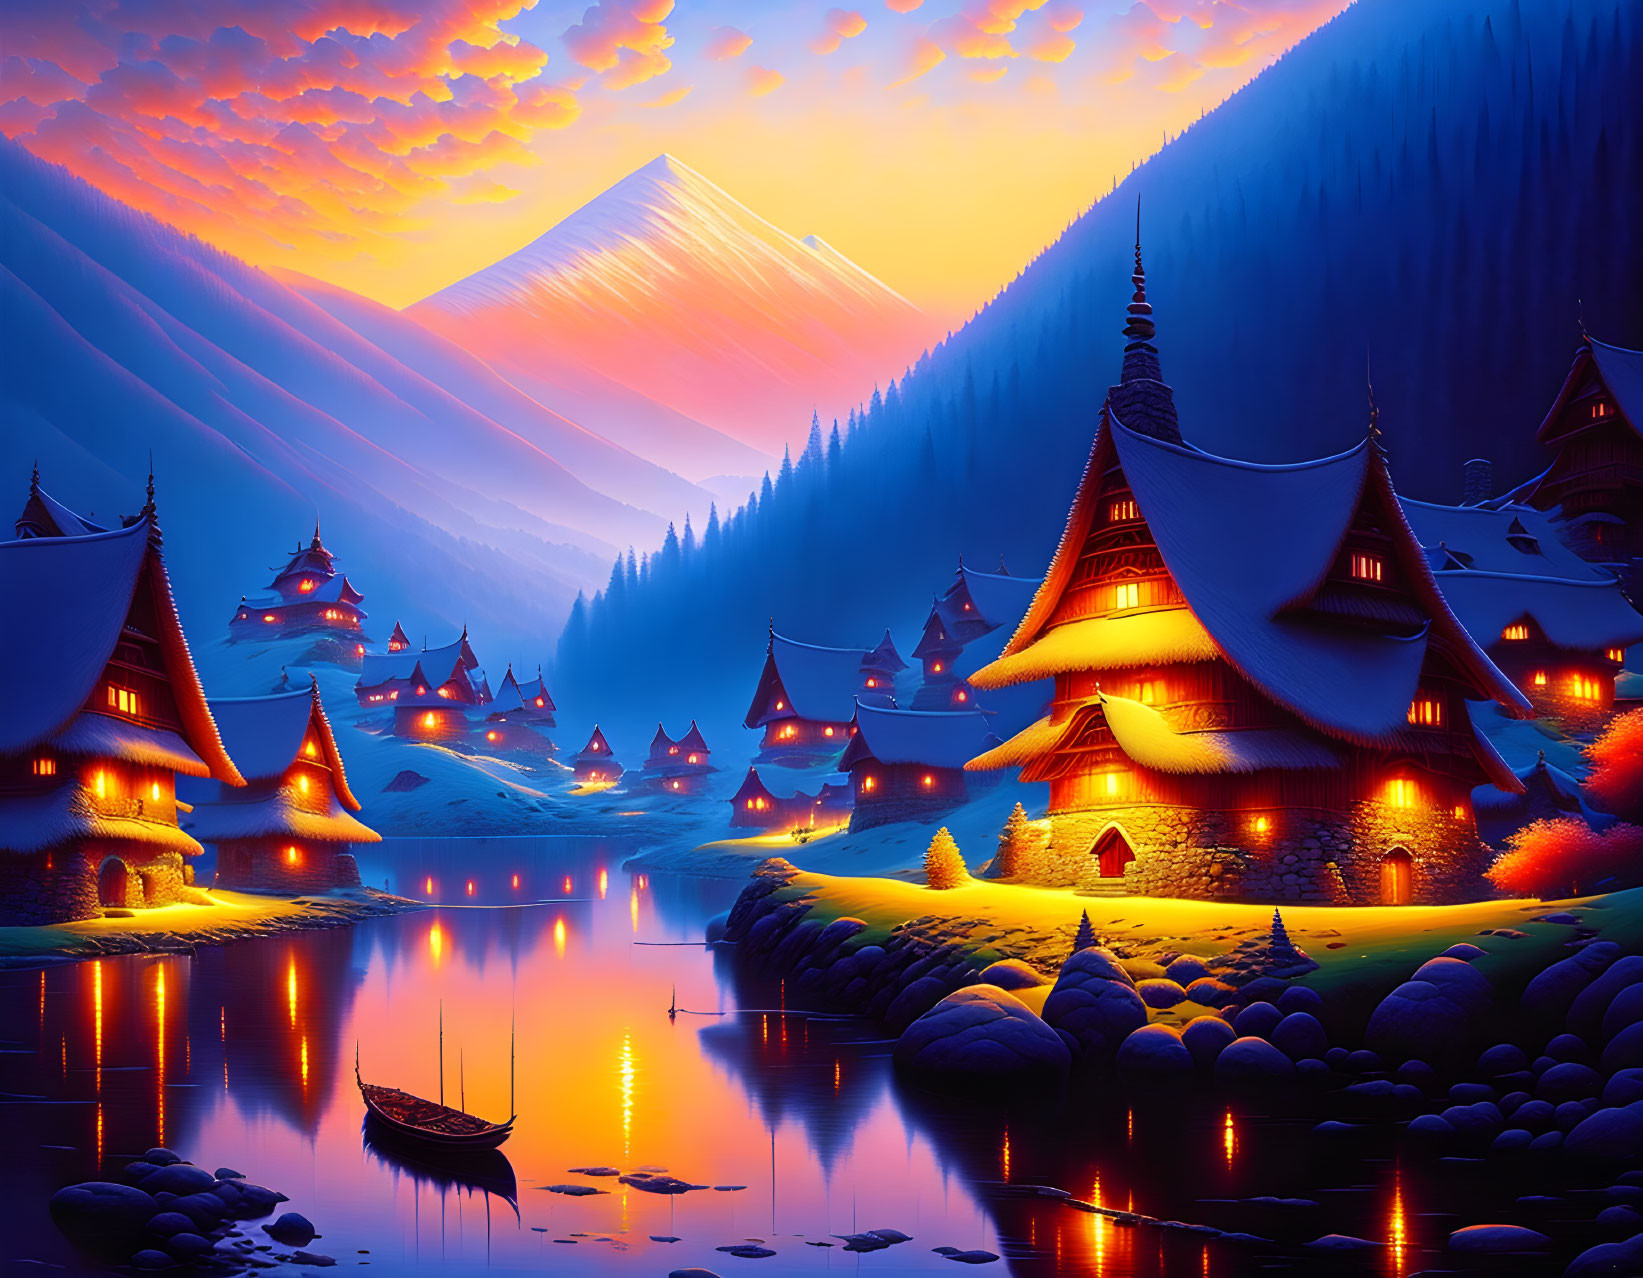 Serene mountain village at twilight by calm lake